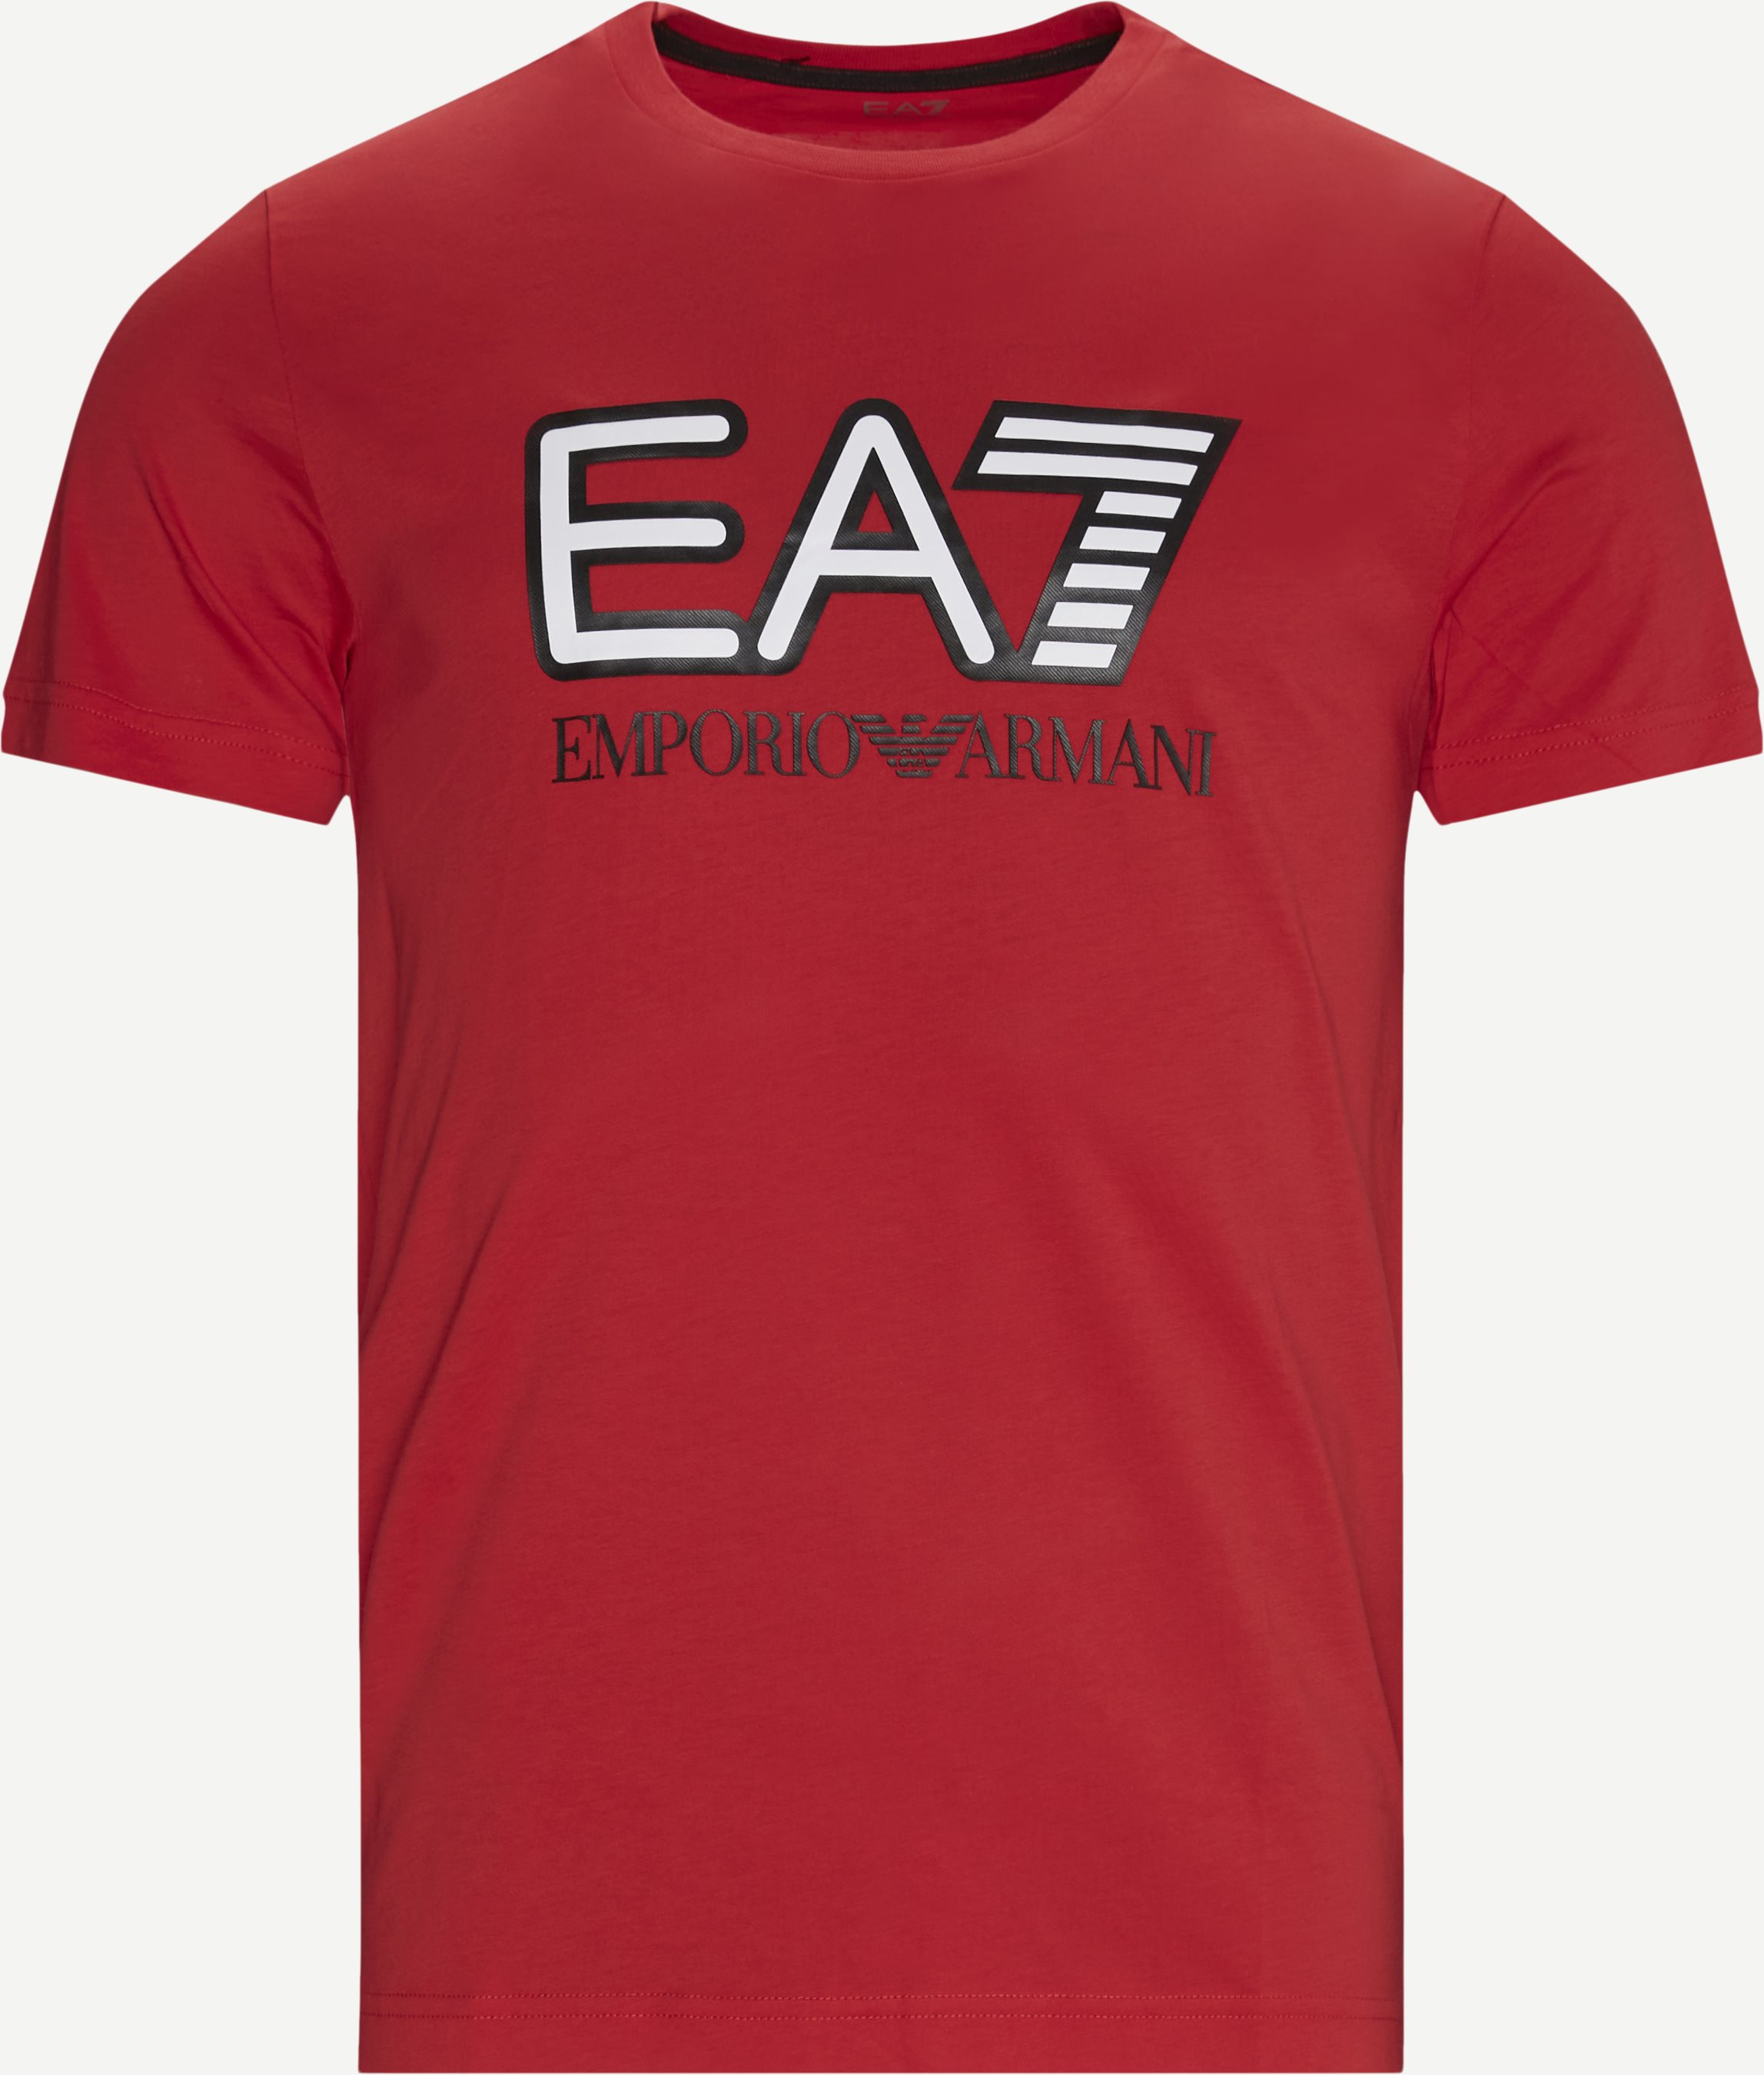 PJM9Z Logo T-shirt - T-shirts - Regular fit - Red